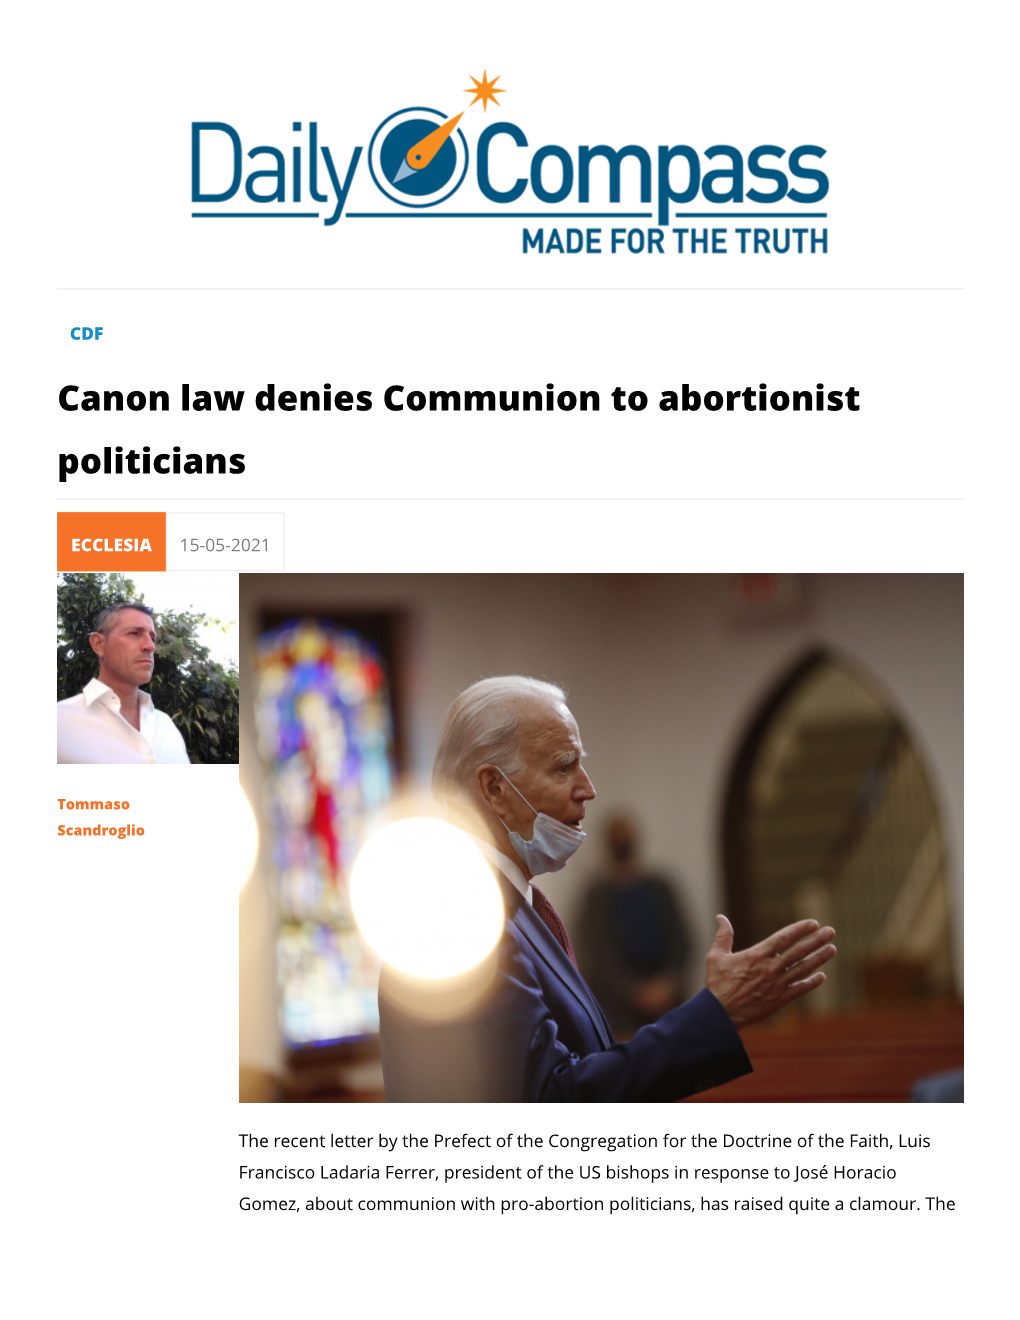 Canon Law Denies Communion to Abortionist Politicians